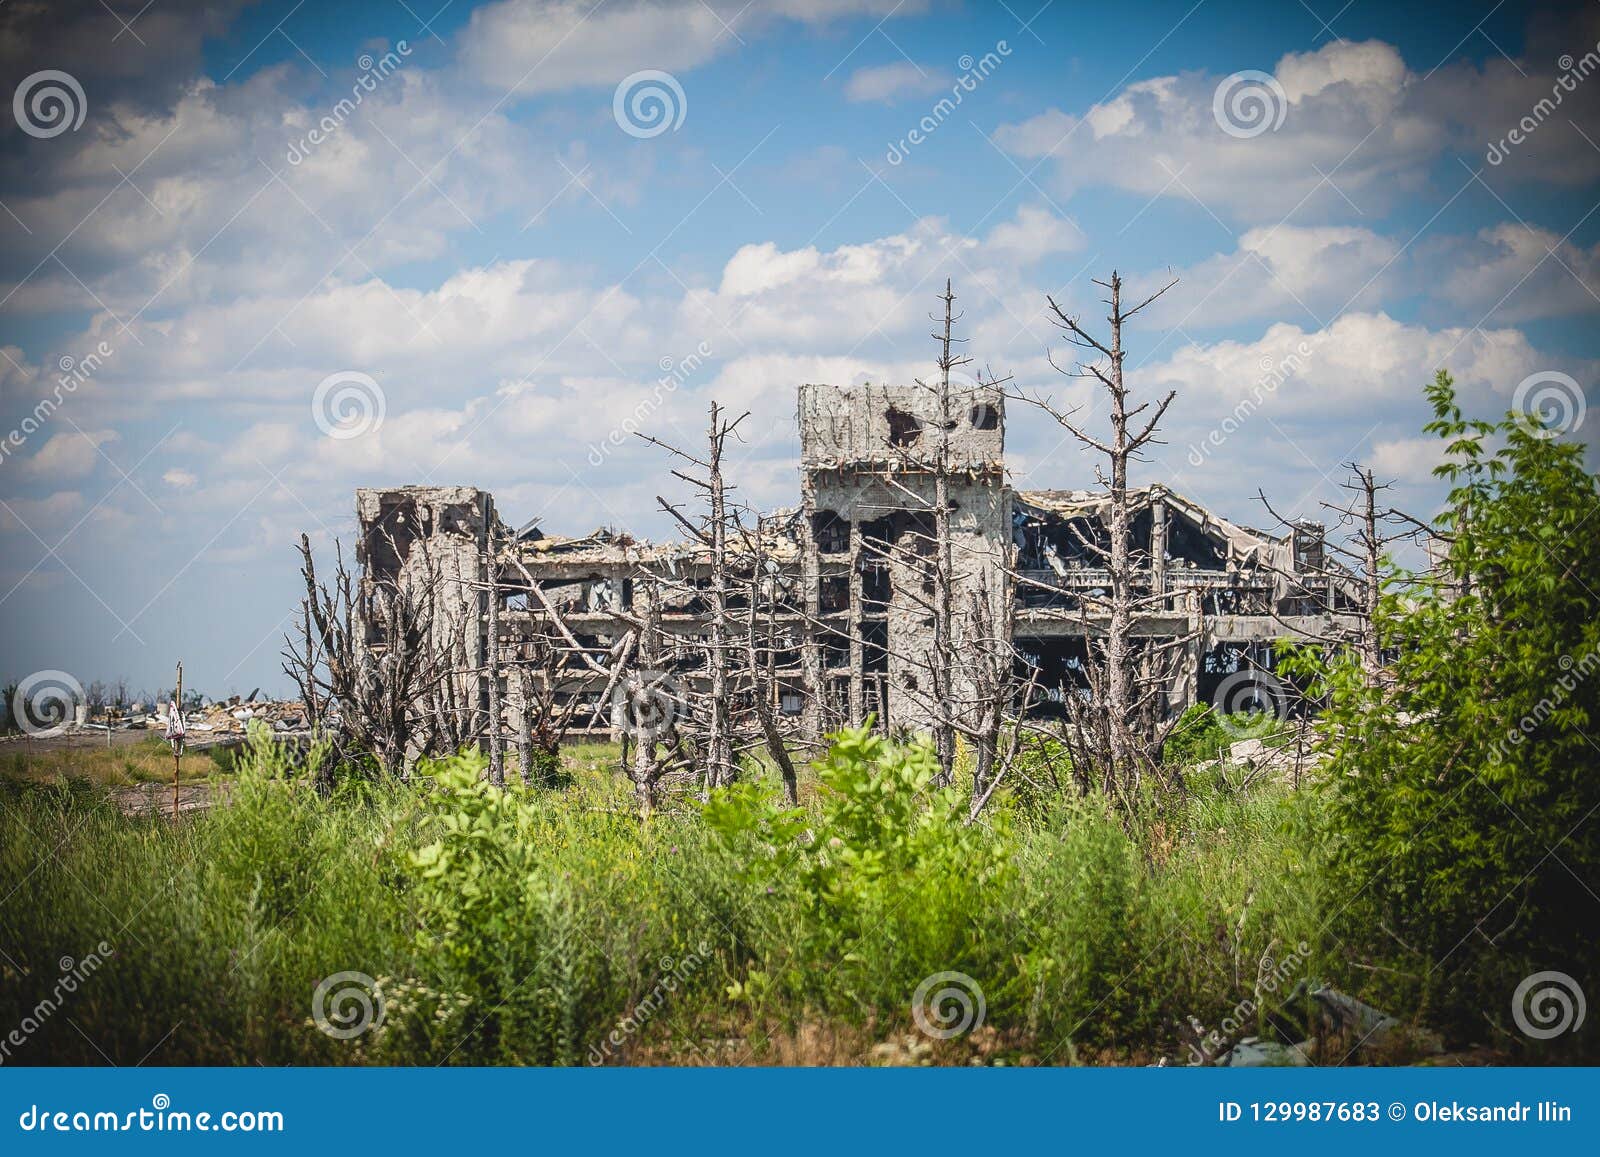 war, airport terminal ruins in donbass